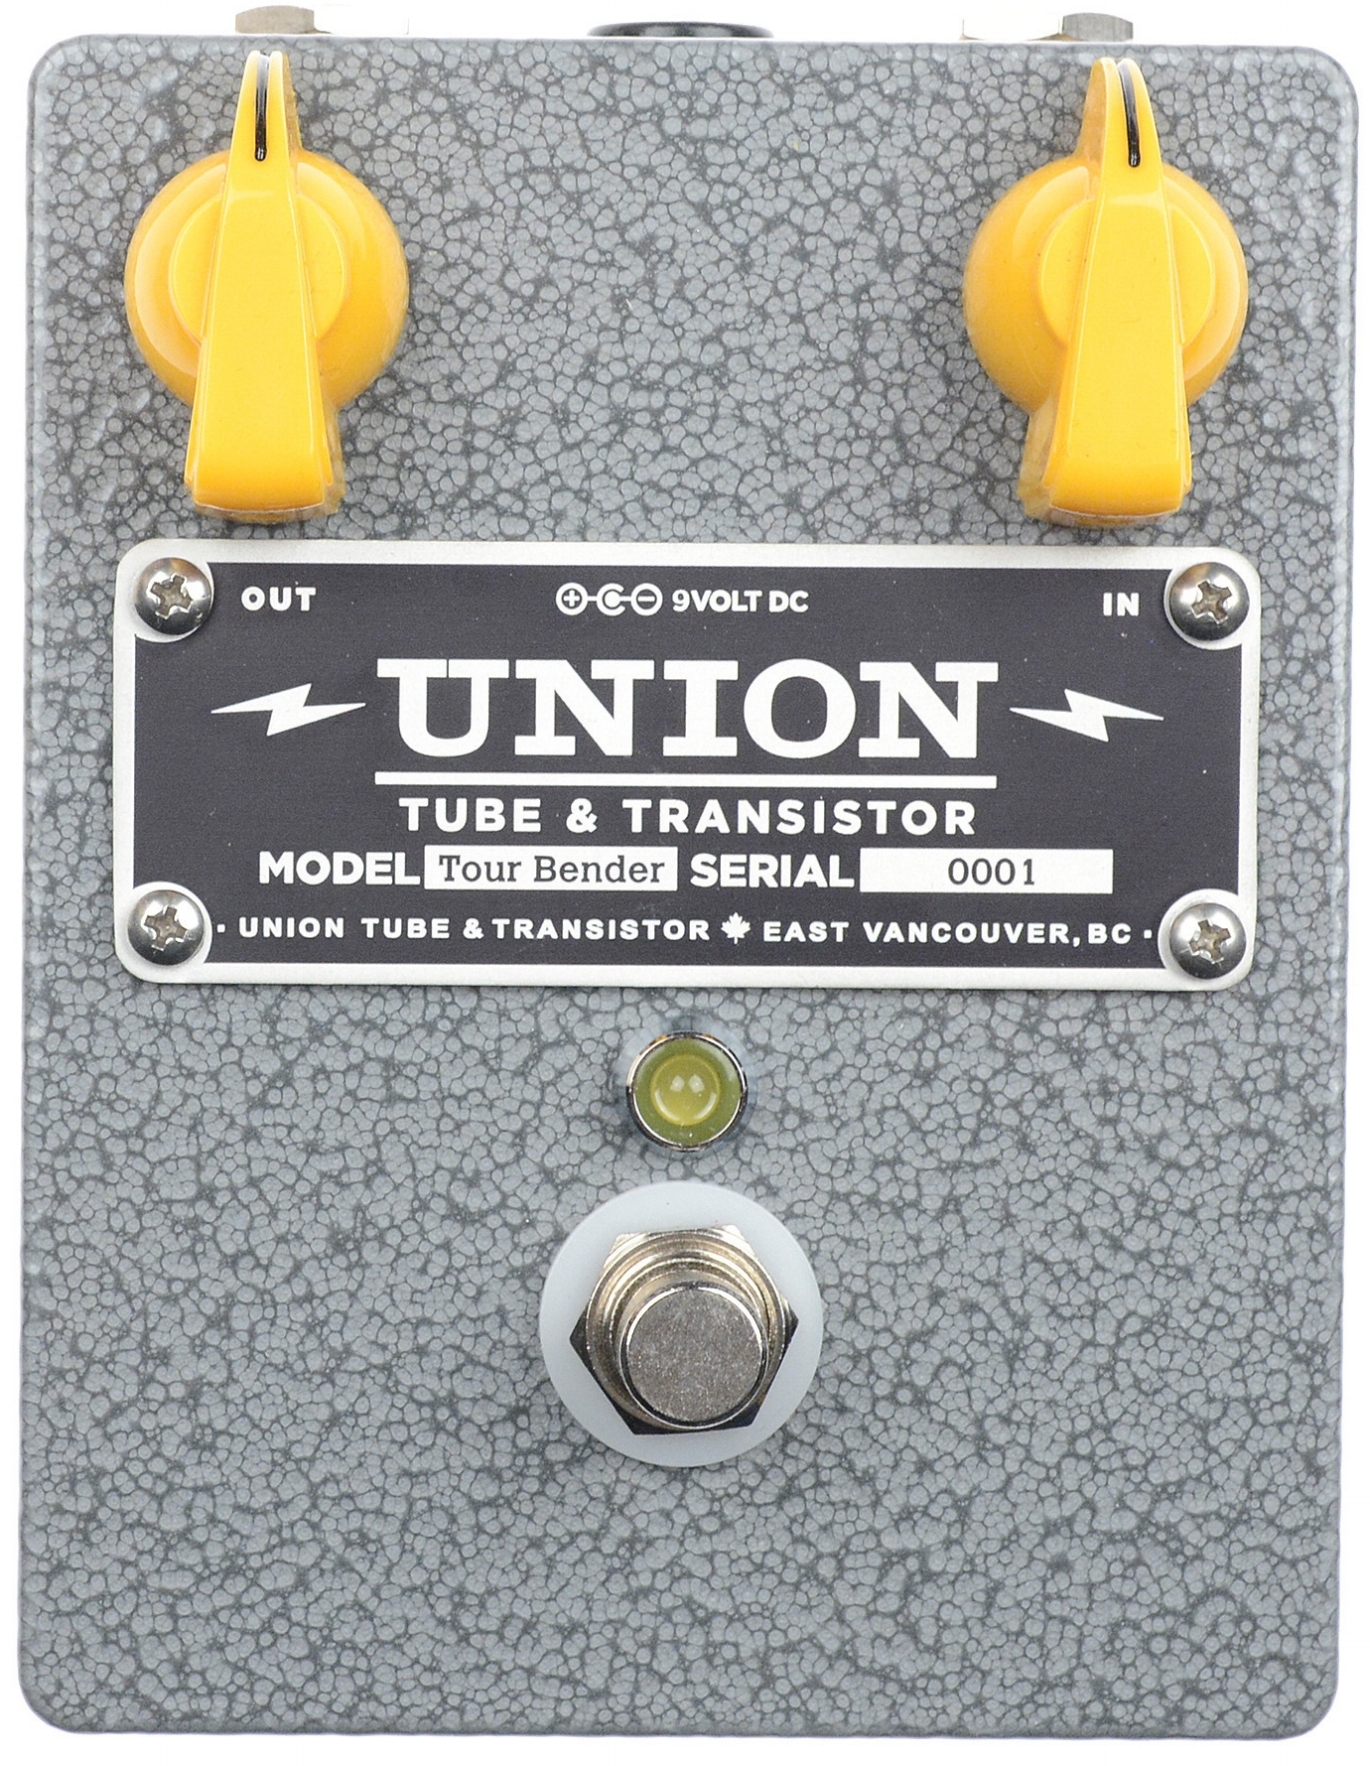 Tour Bender — Union Tube & Transistor